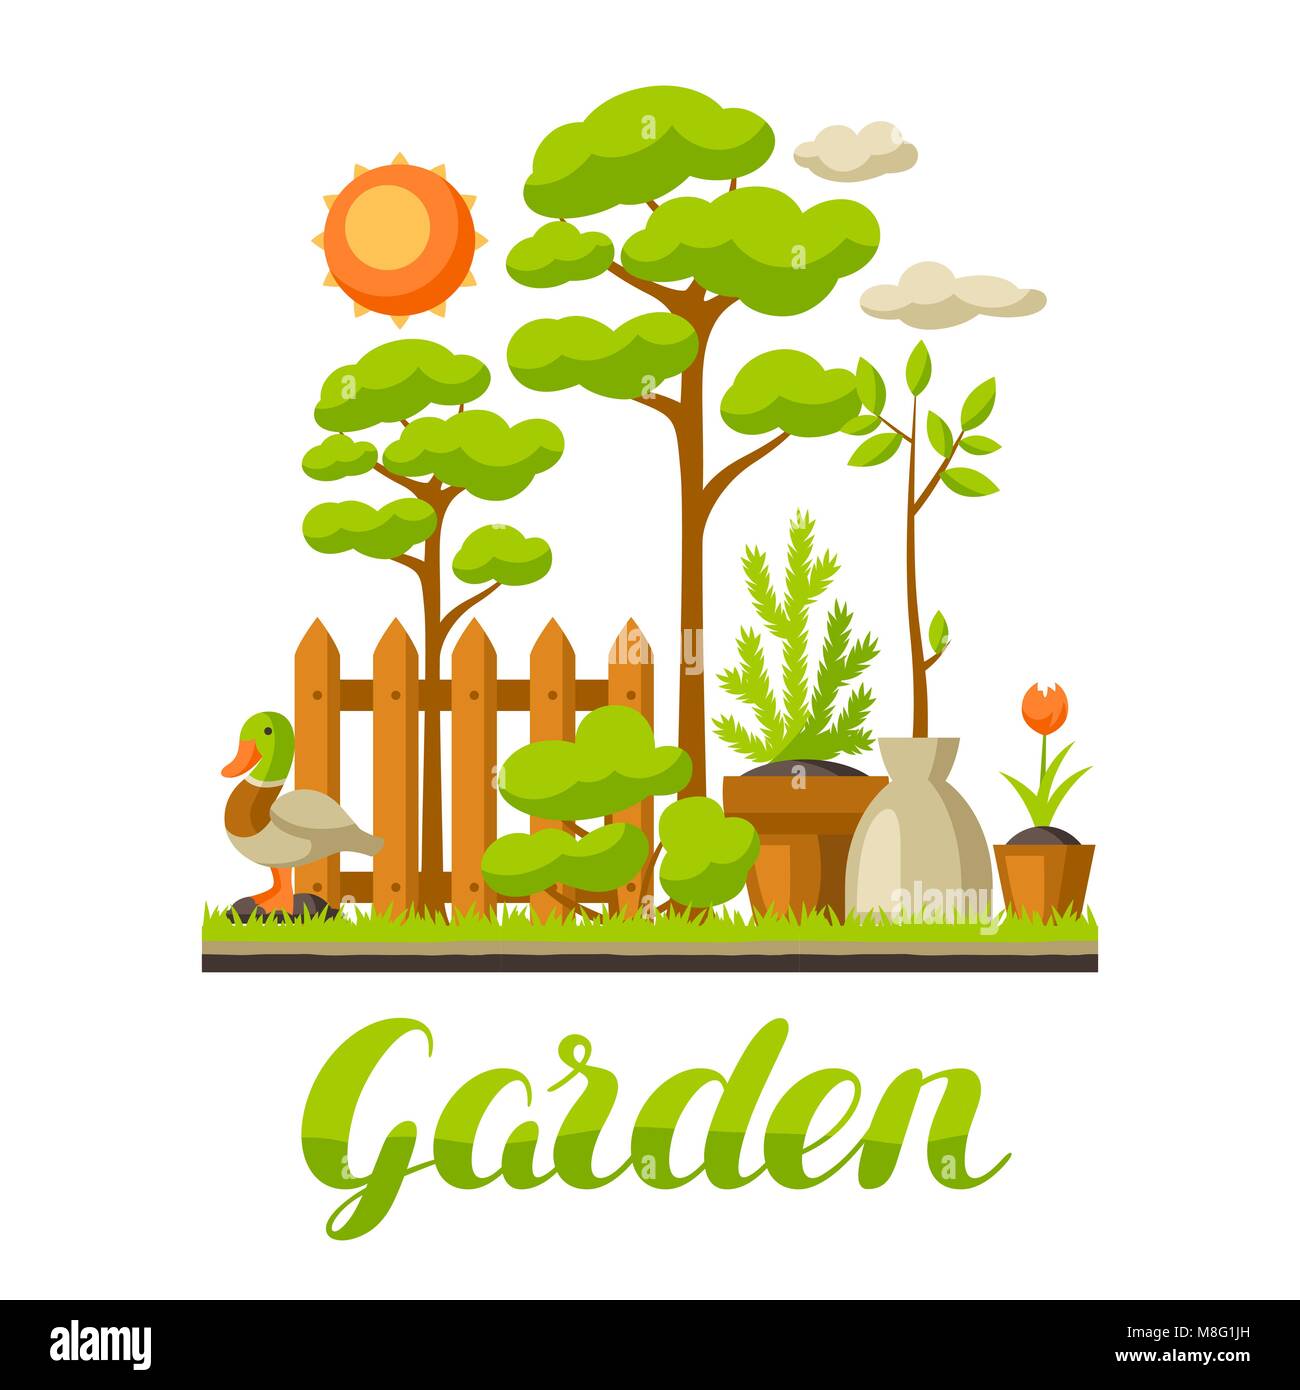 Garden landscape illustration with plants. Season gardening concept Stock Vector